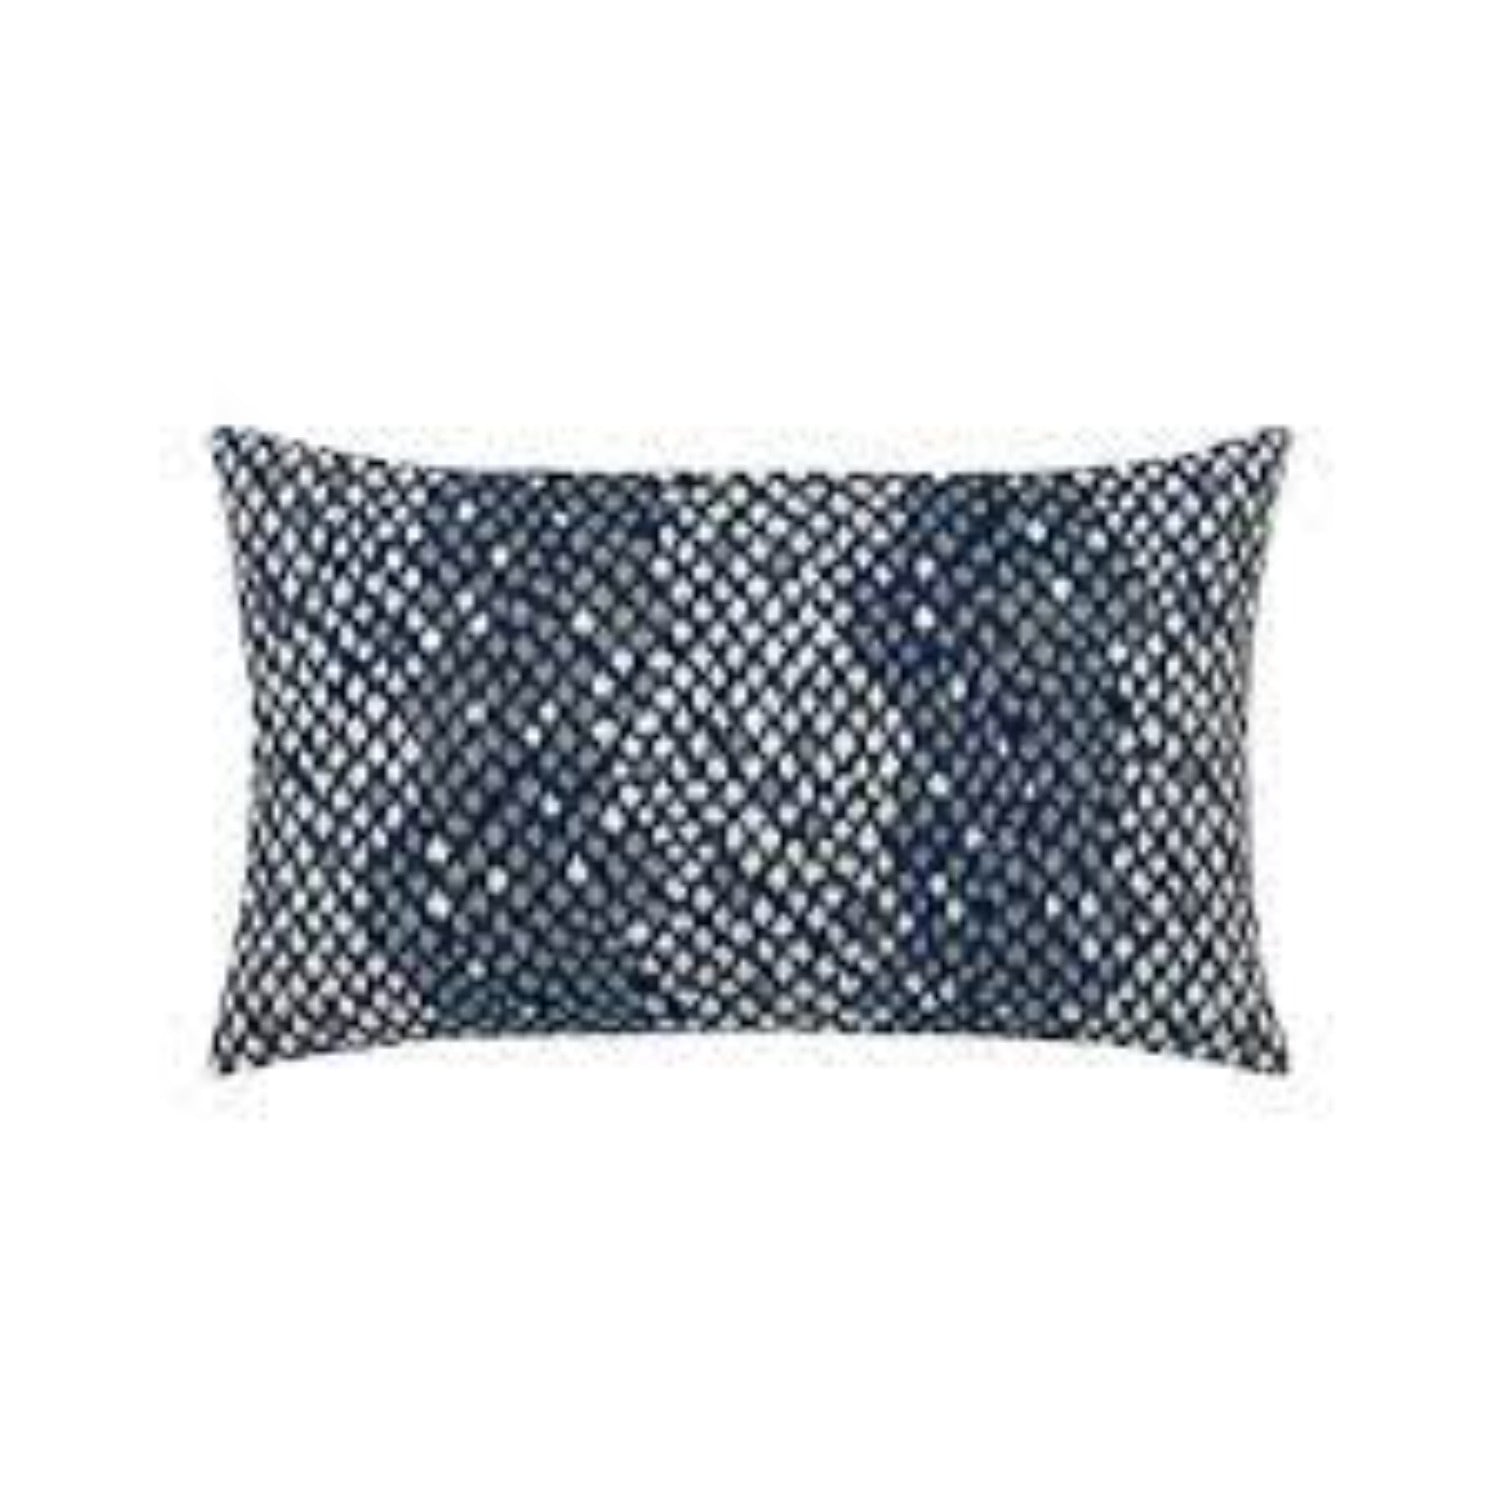 SALE! Elaine Smith 12" x 20" Lumbar Outdoor Pillow - Python Midnight - Polyester Fiber Fill Throw Pillows 12030989